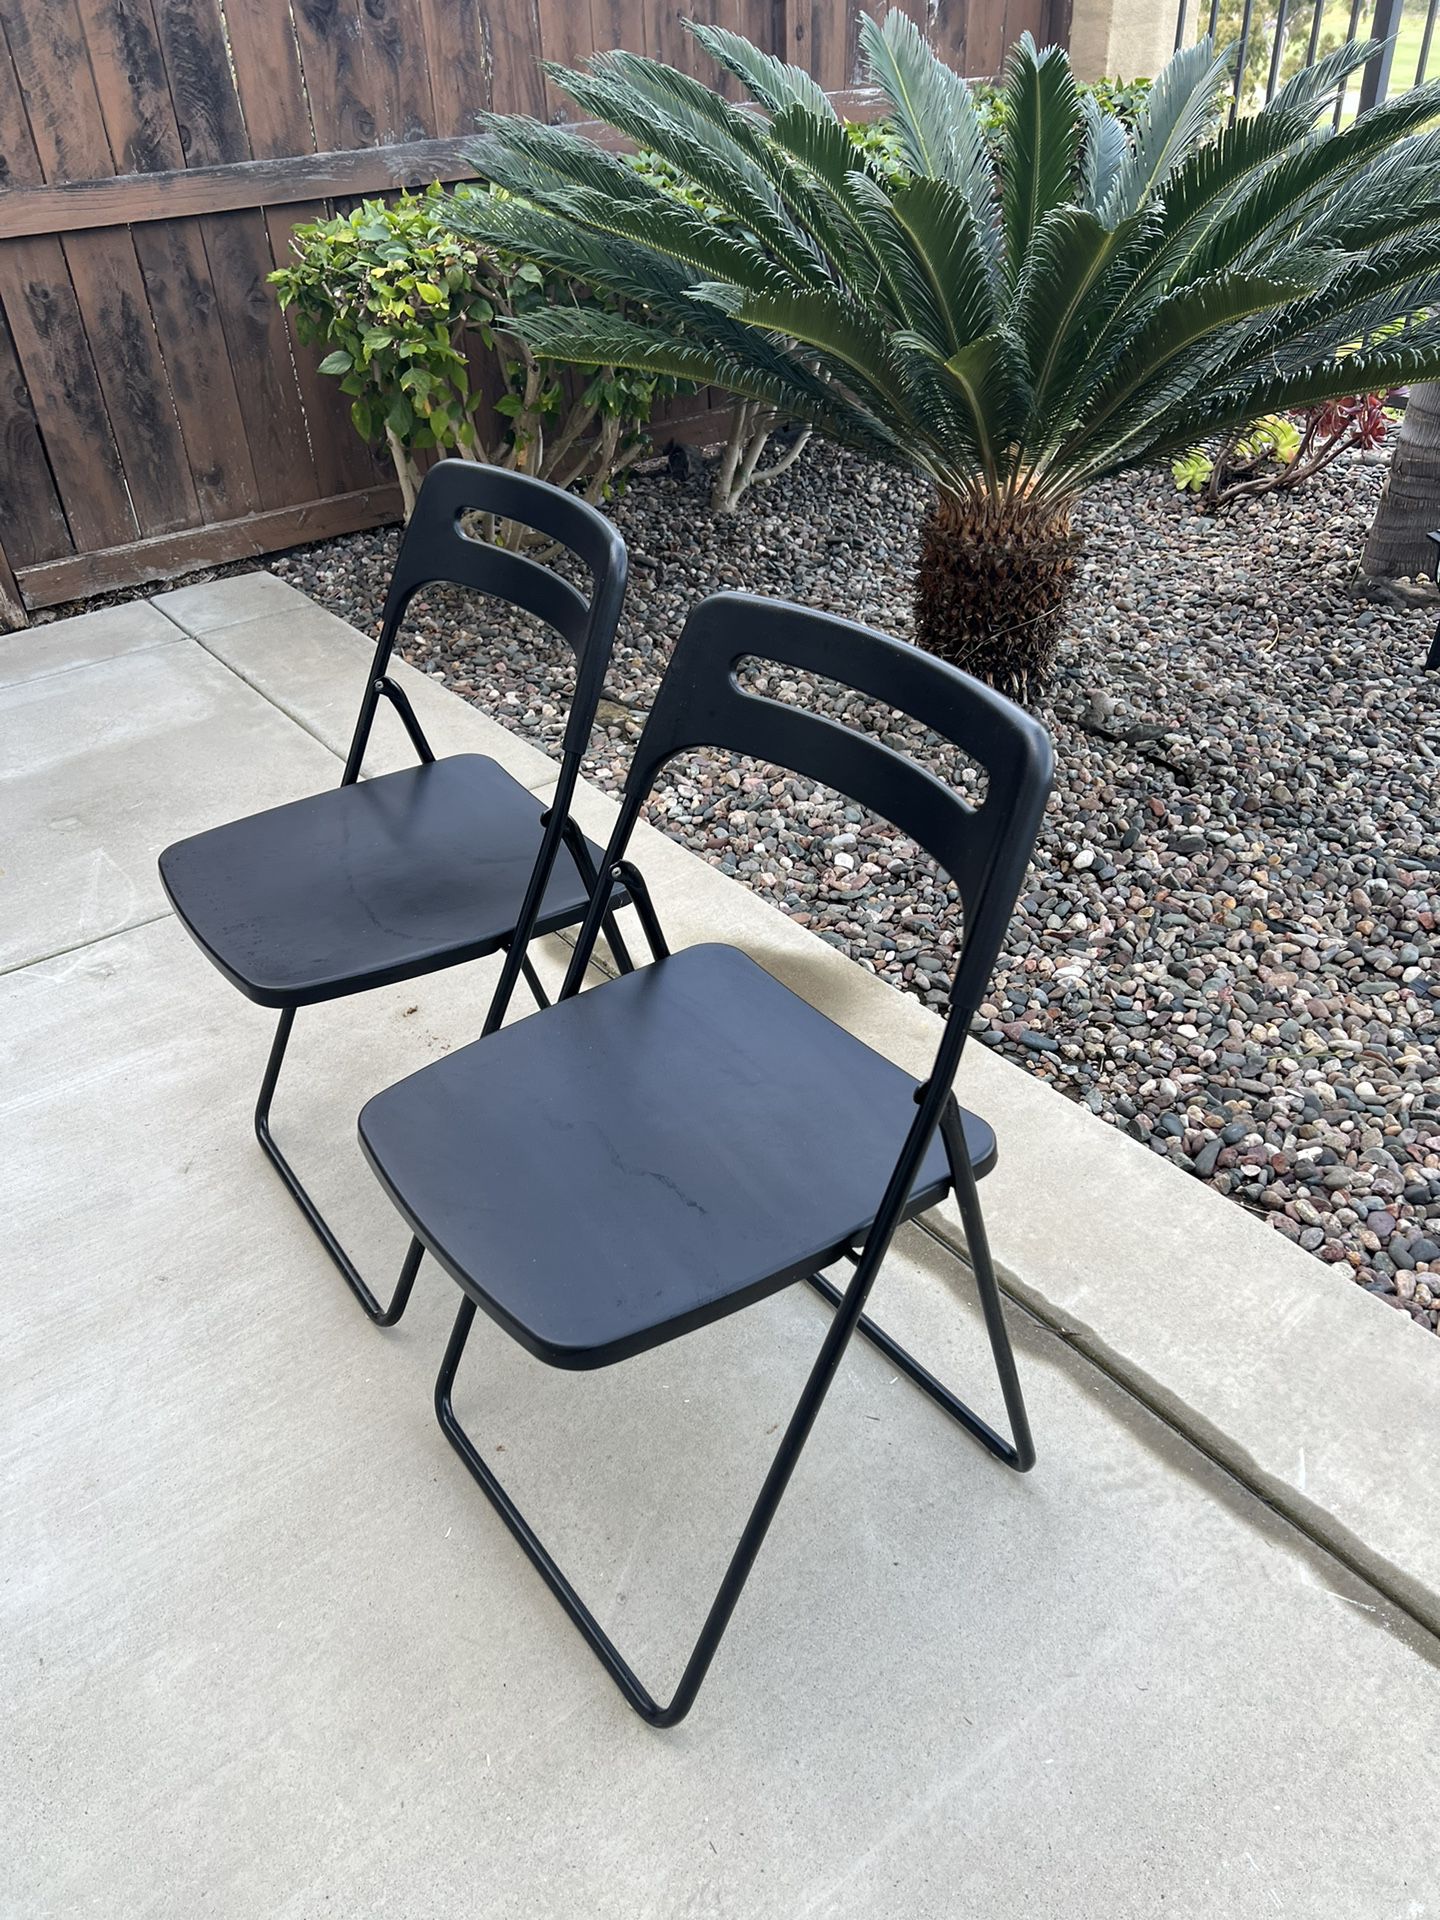 10 IKEA Foldable Chairs